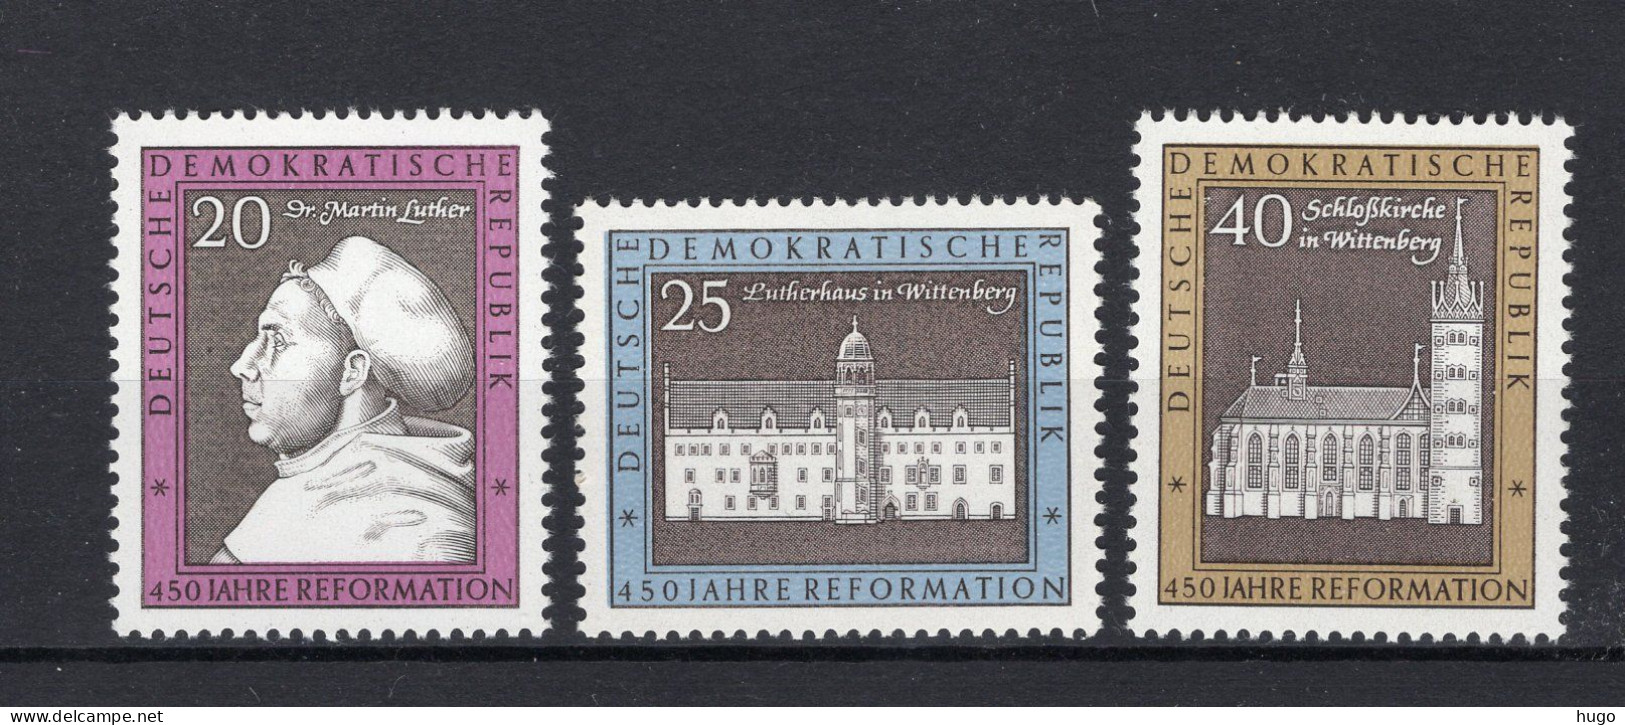 DDR Yt. 1014/1016 MNH 1967 - Neufs